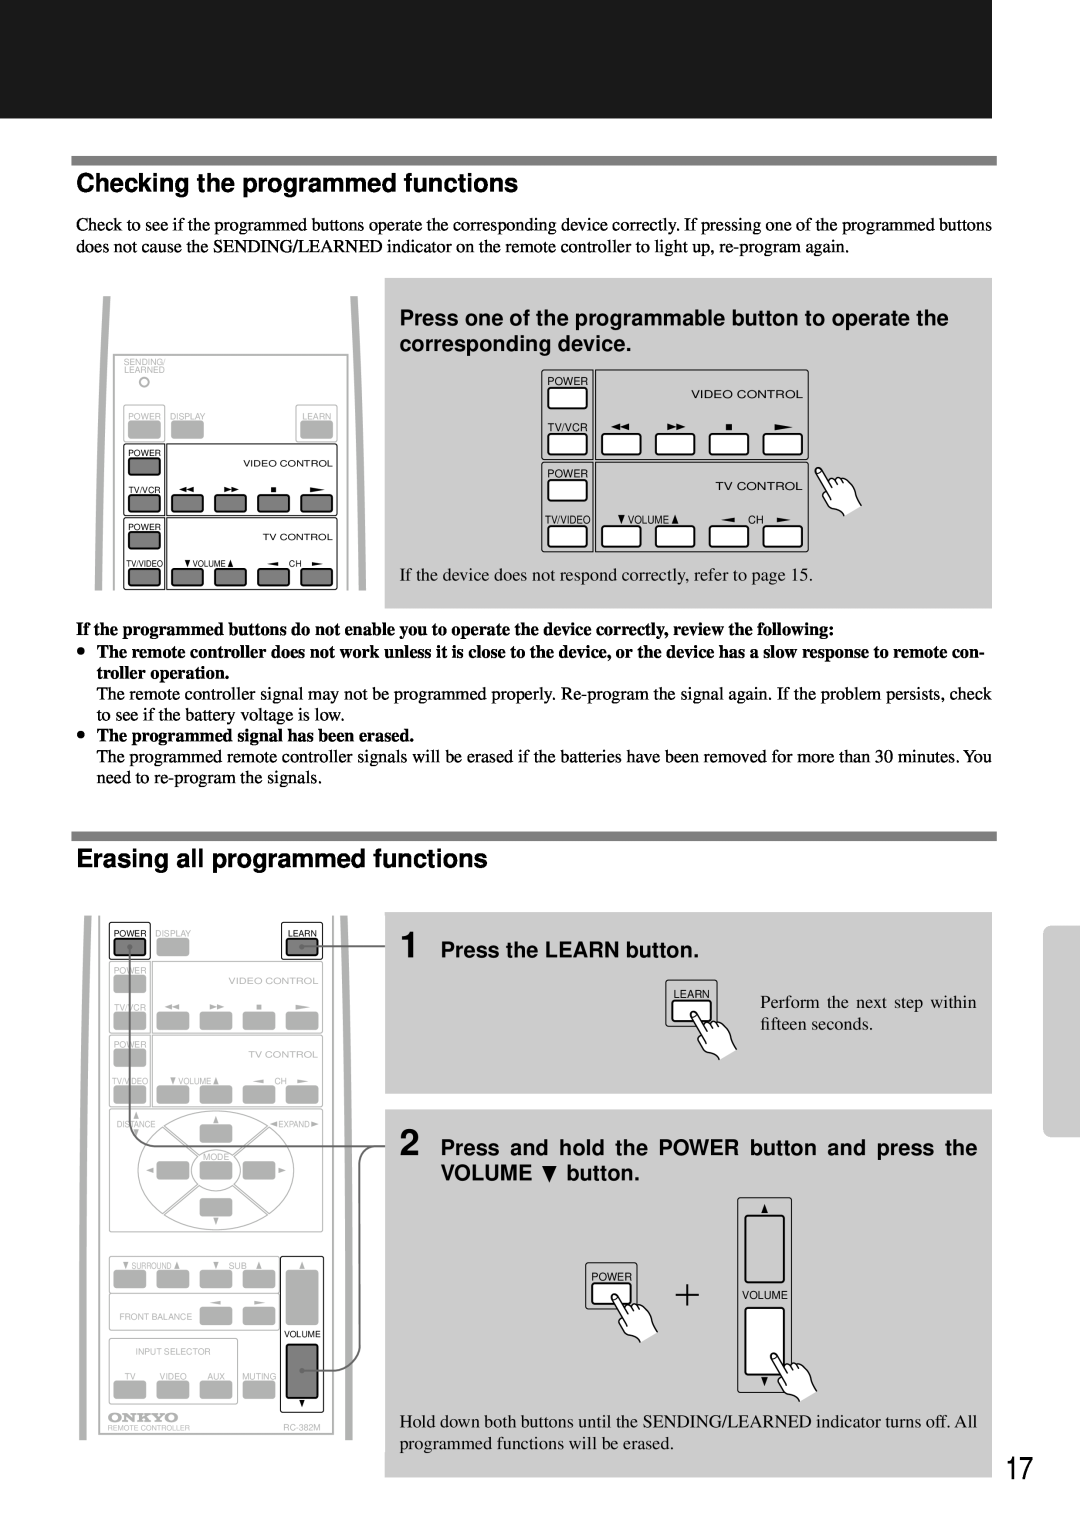 Onkyo PHC-5 instruction manual Checking the programmed functions, Erasing all programmed functions 